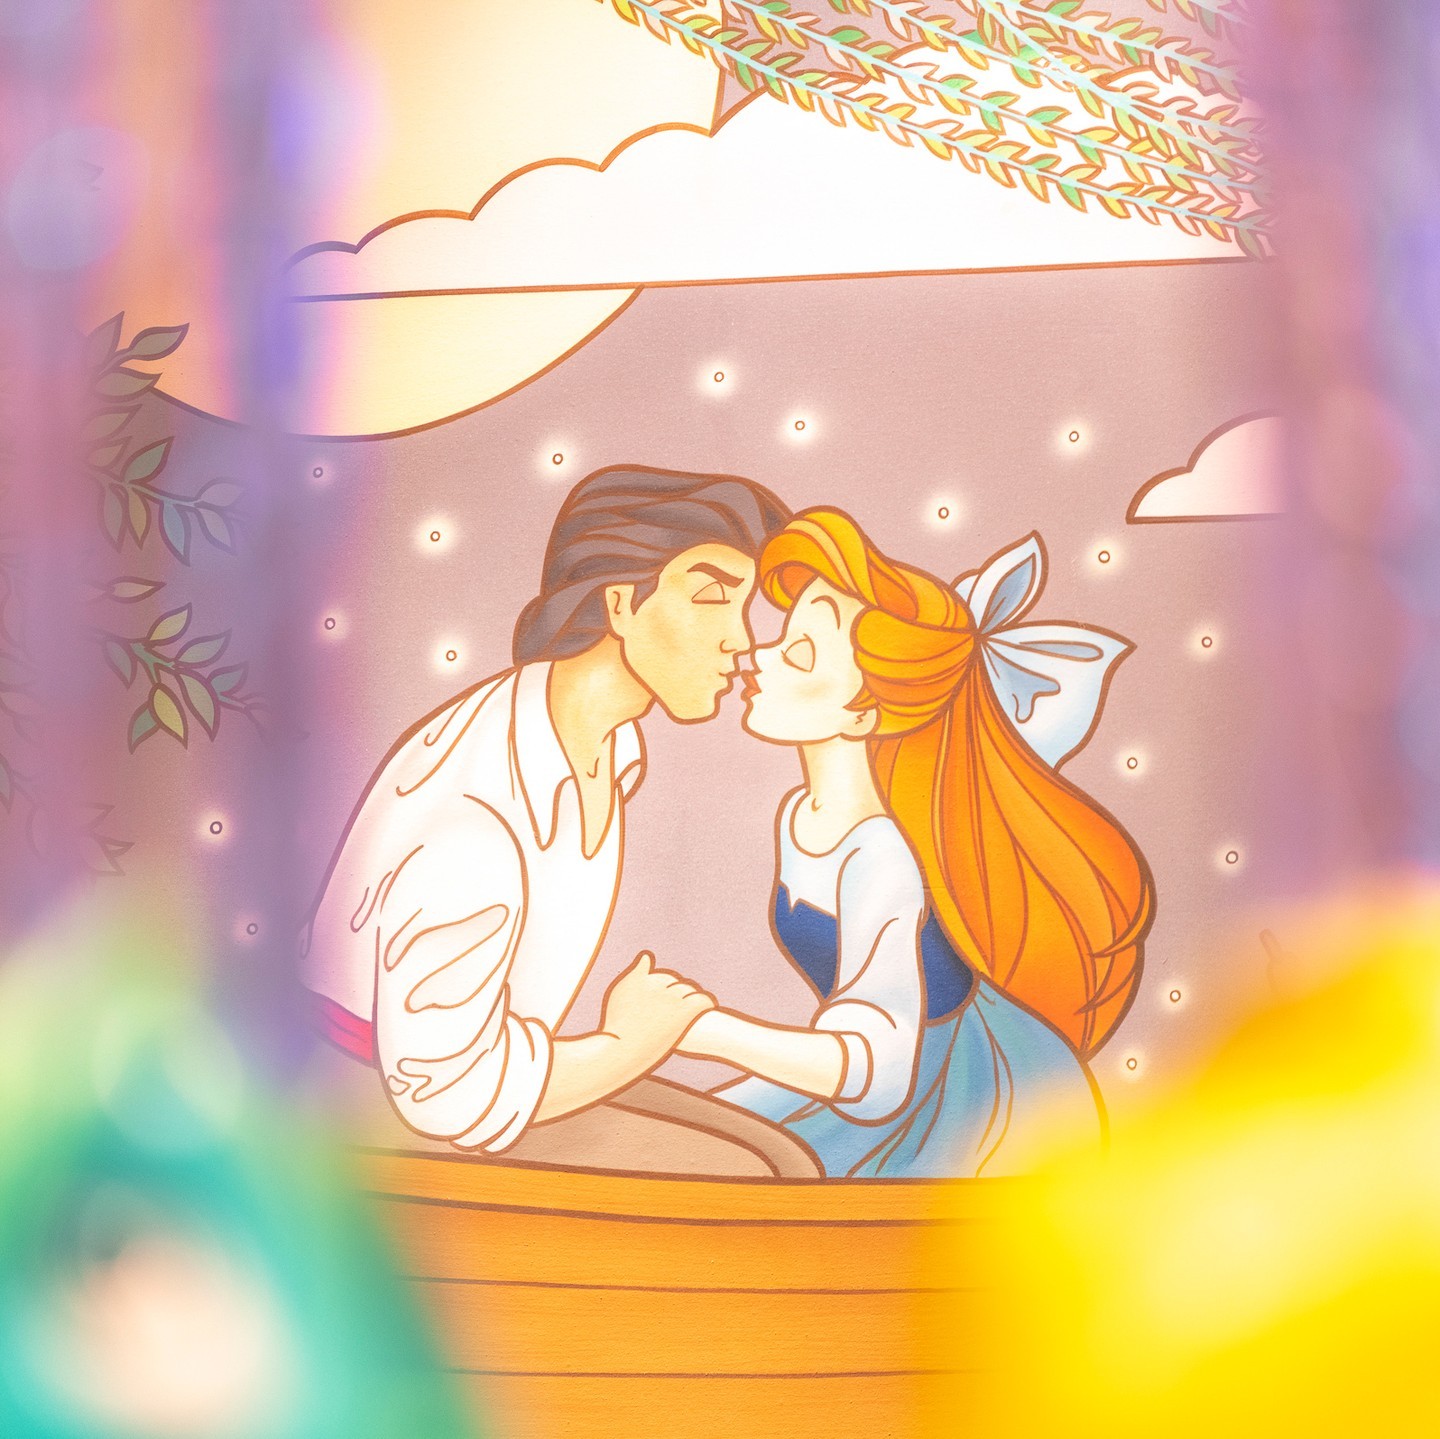 True romance♡
この幸せよ、永遠に
#ariel #princeeric #thelittlemermaid #kissdegirlfashions...のイメージ